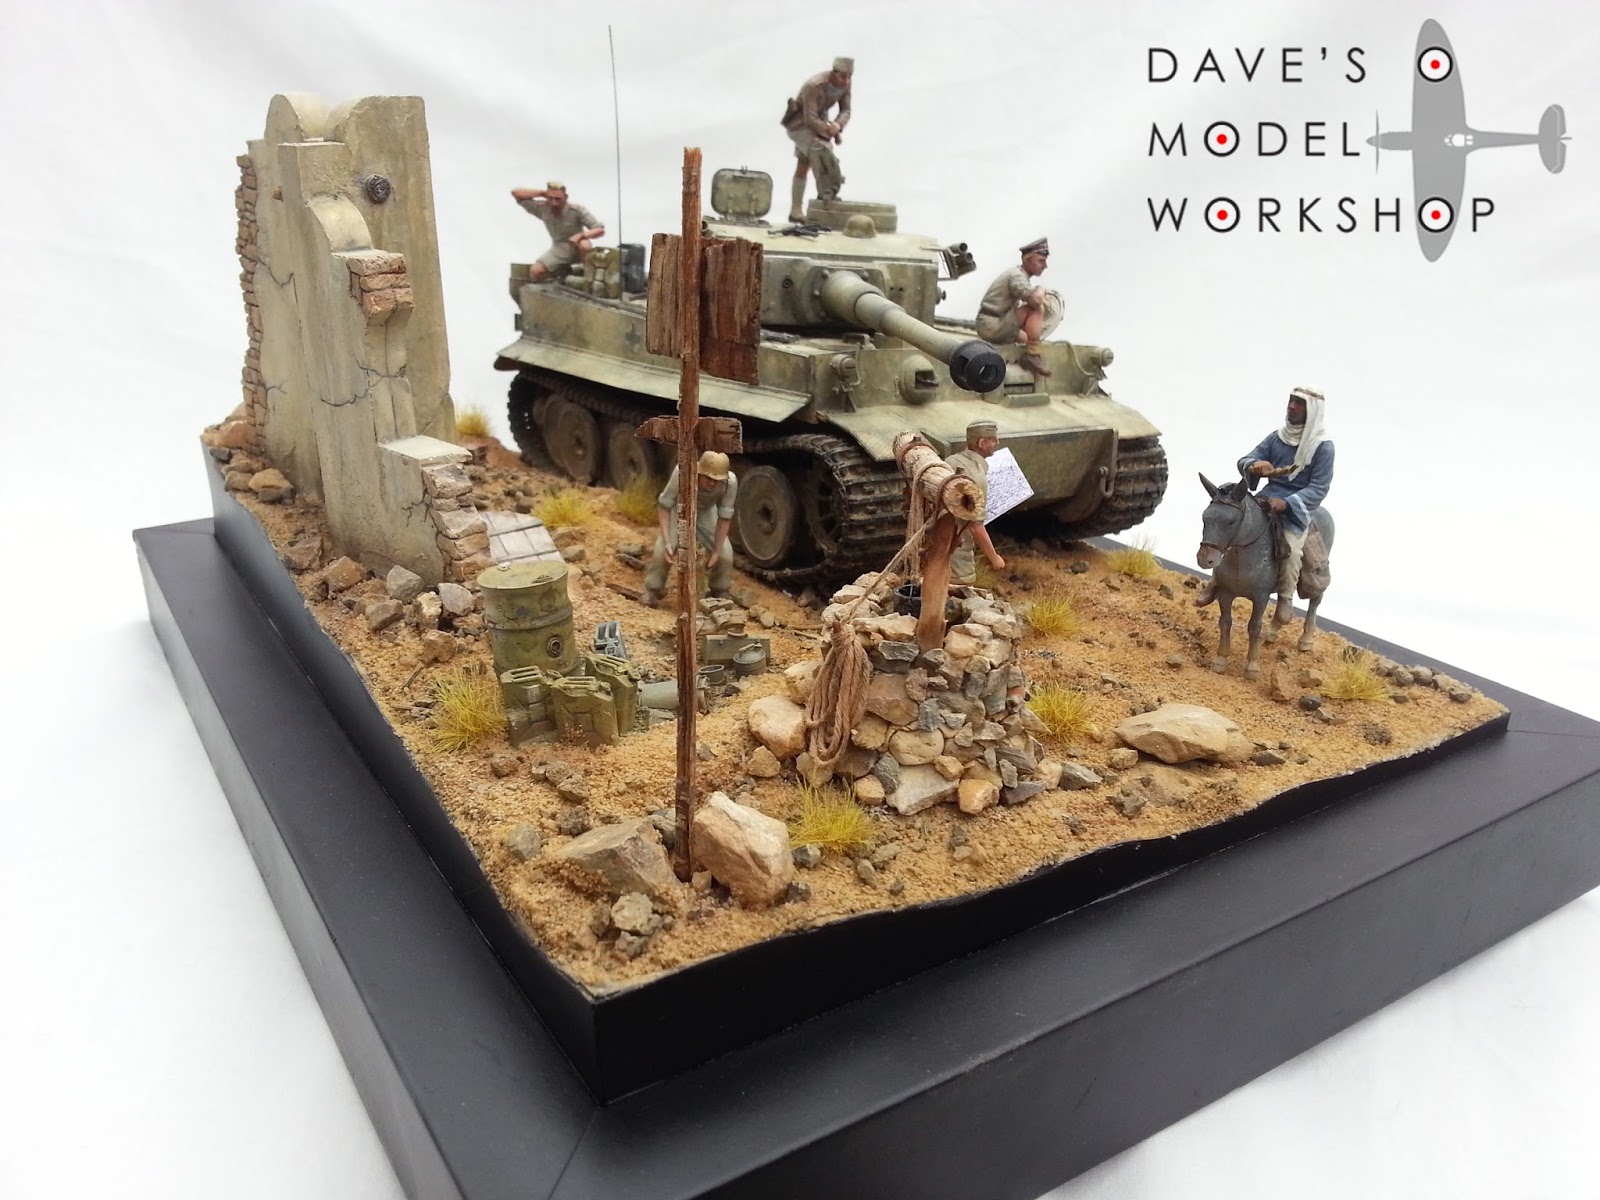 Dave's Model Workshop: New video: How to make a mini diorama scene